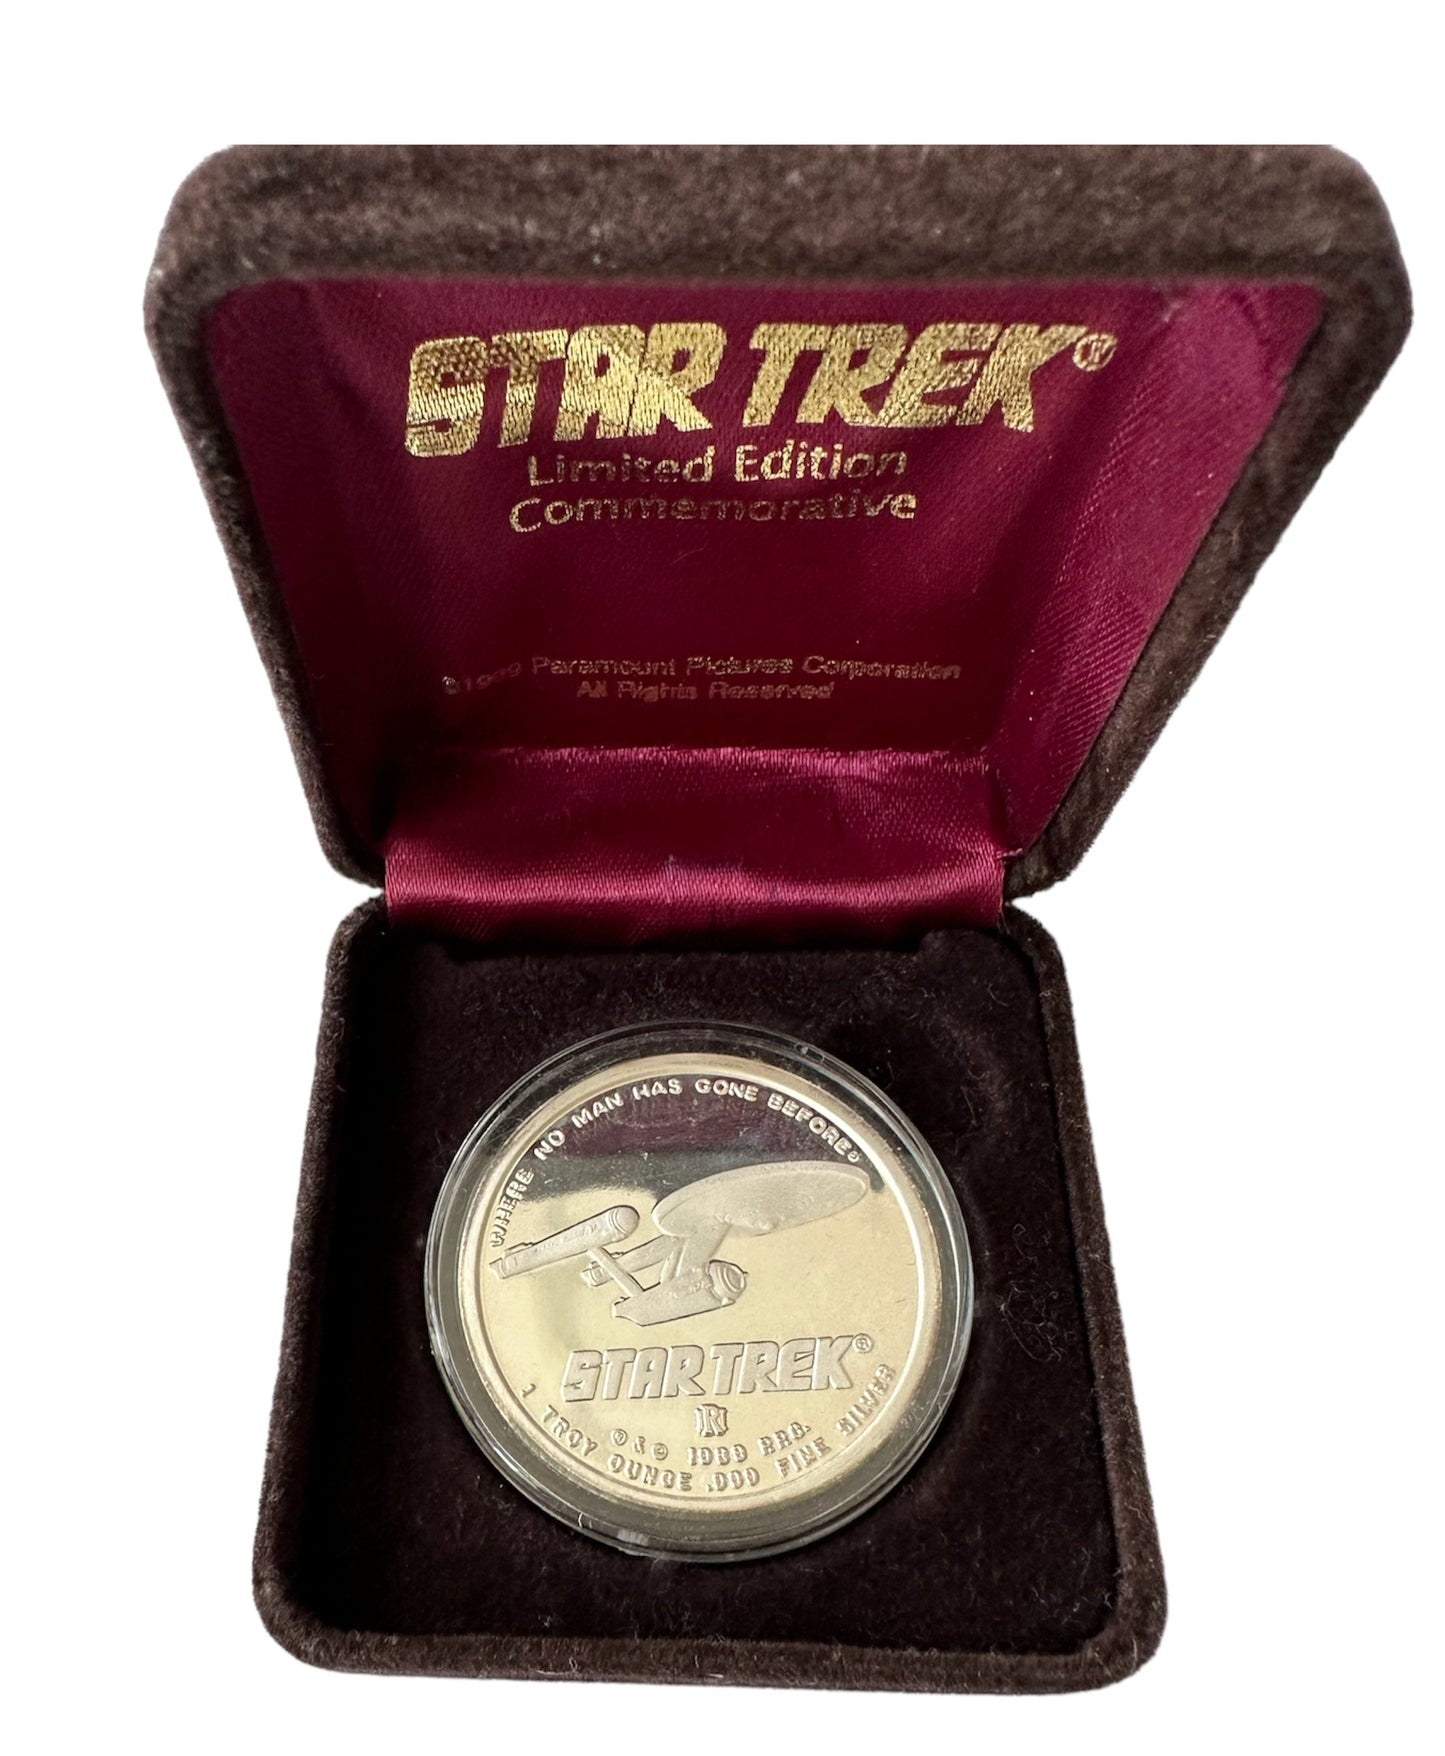 Vintage Rarities Mint 1989 Limited Edition Star Trek The Original Series Commemorative Silver Coin - Lieutenant Uhura - Shop Stock Room Find